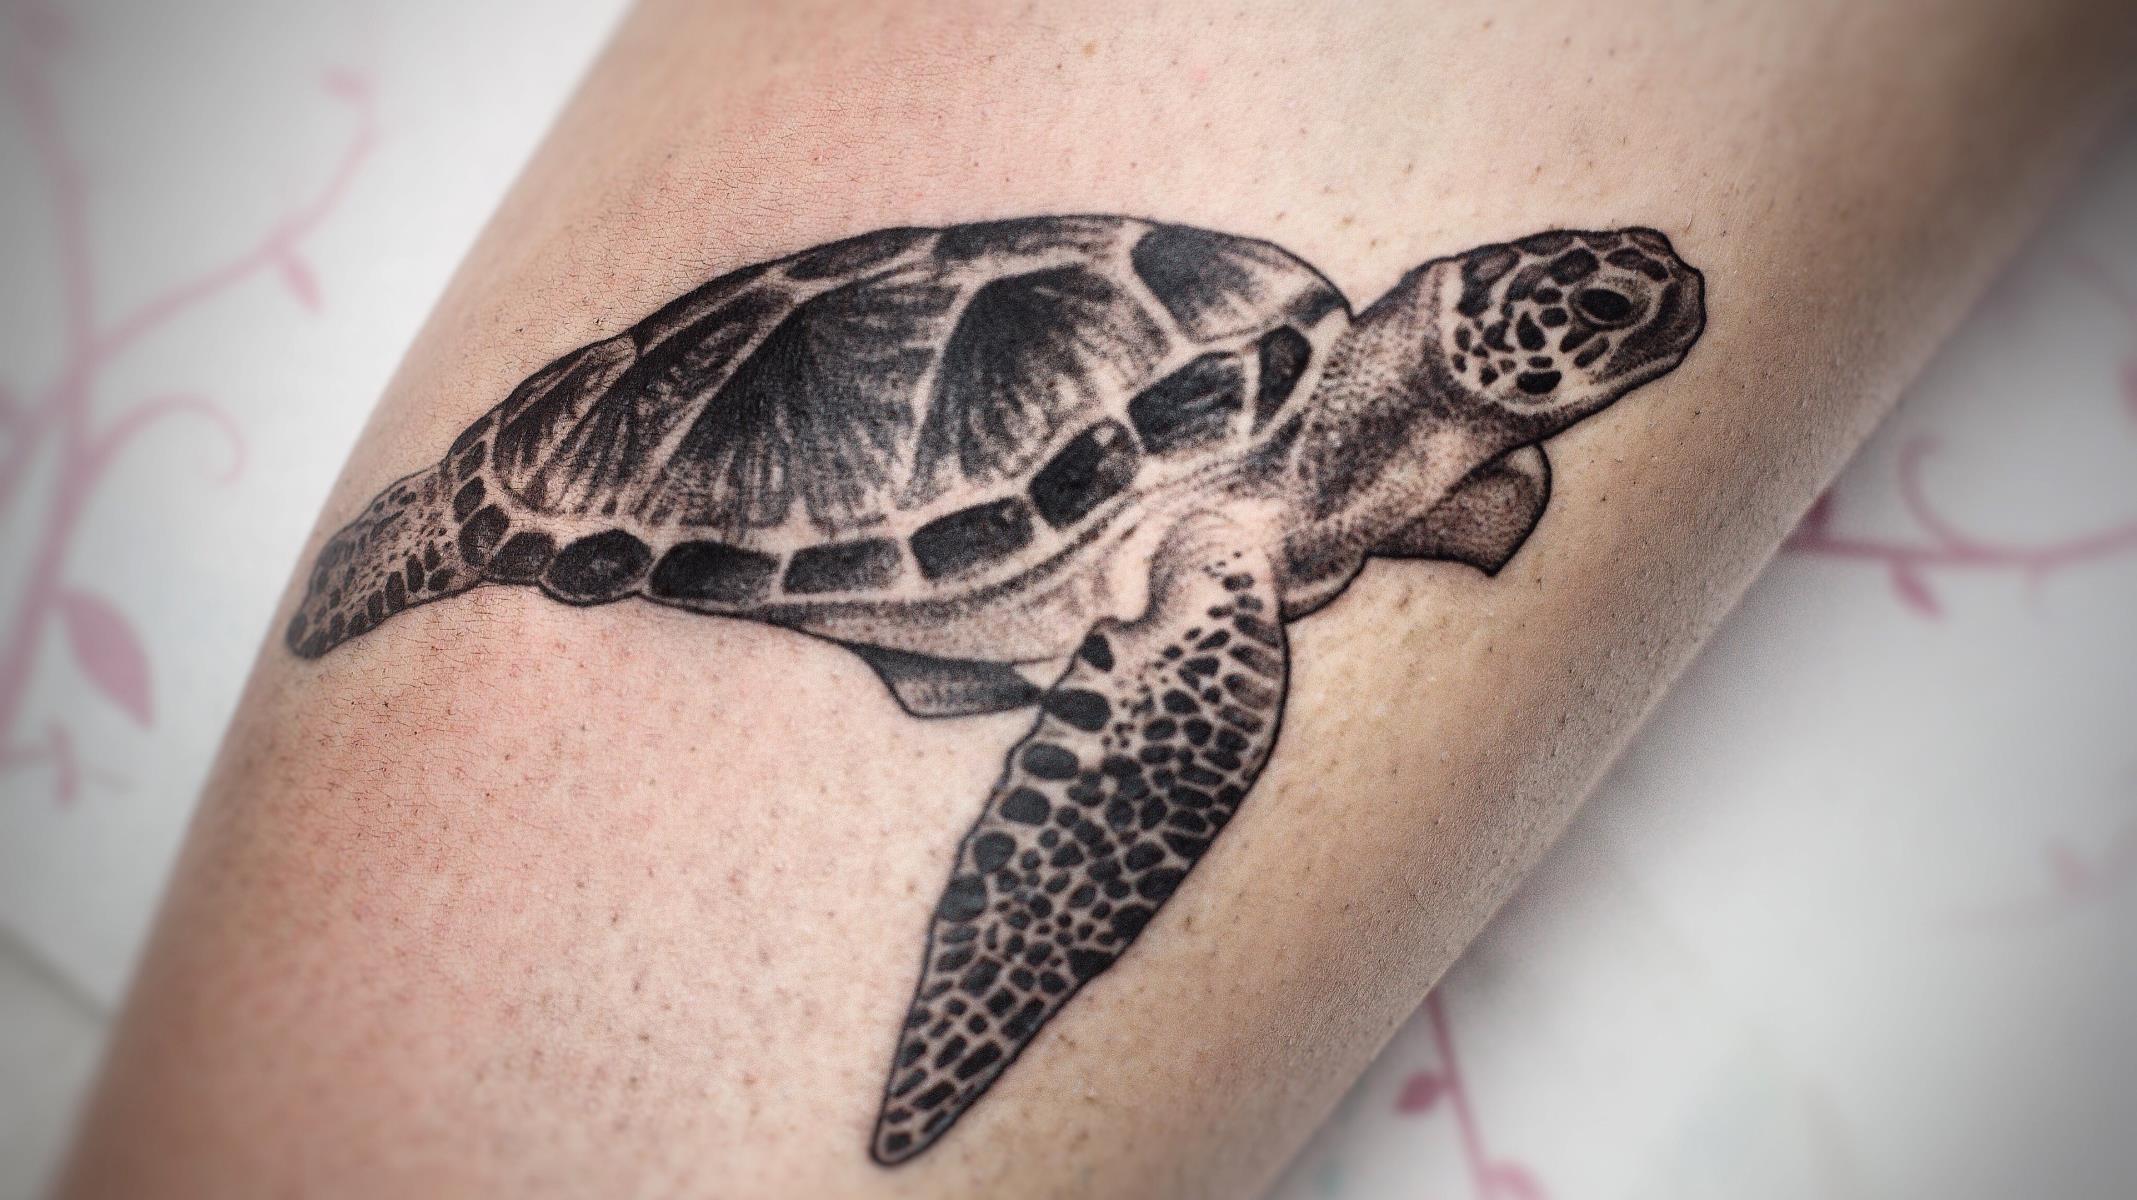 The Hidden Symbolism Behind Turtle Tattoos Revealed!